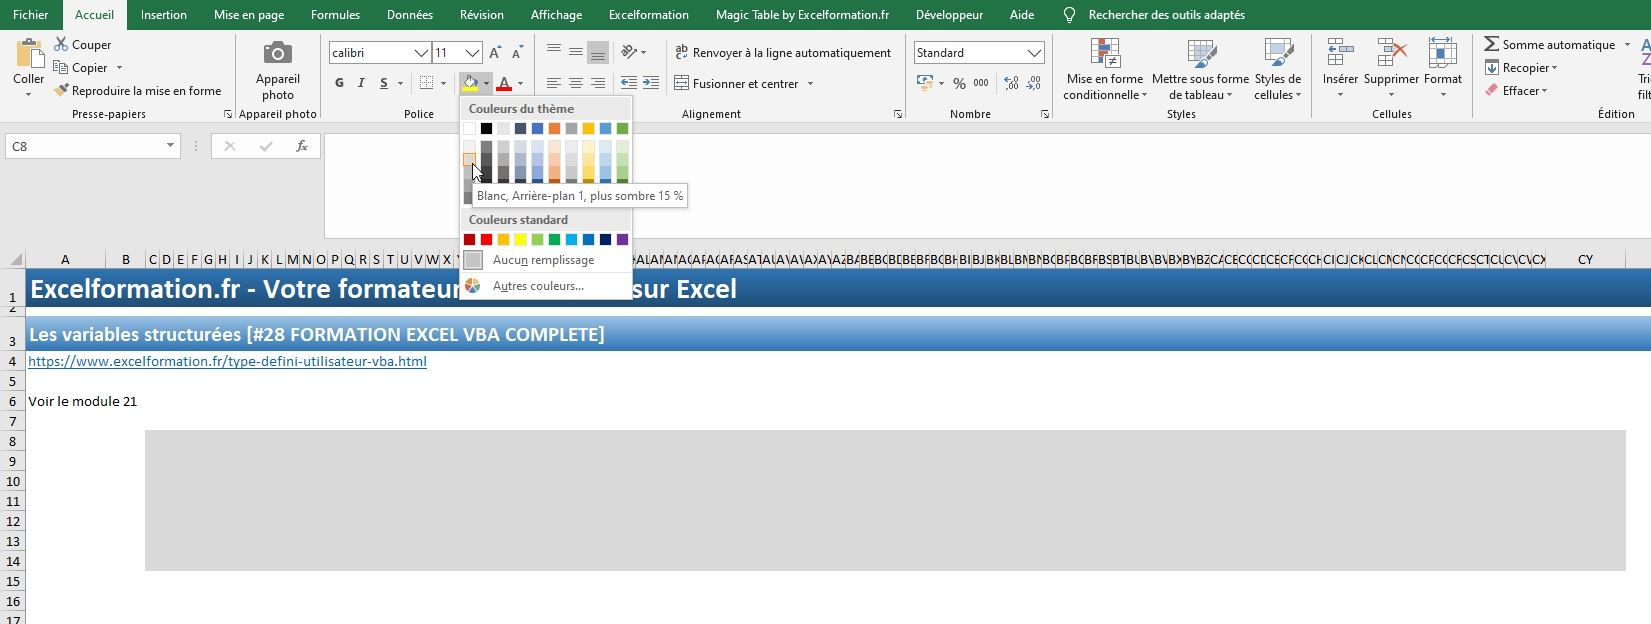 Excel formation - VBA28 vba type personnalisé 3 - 05